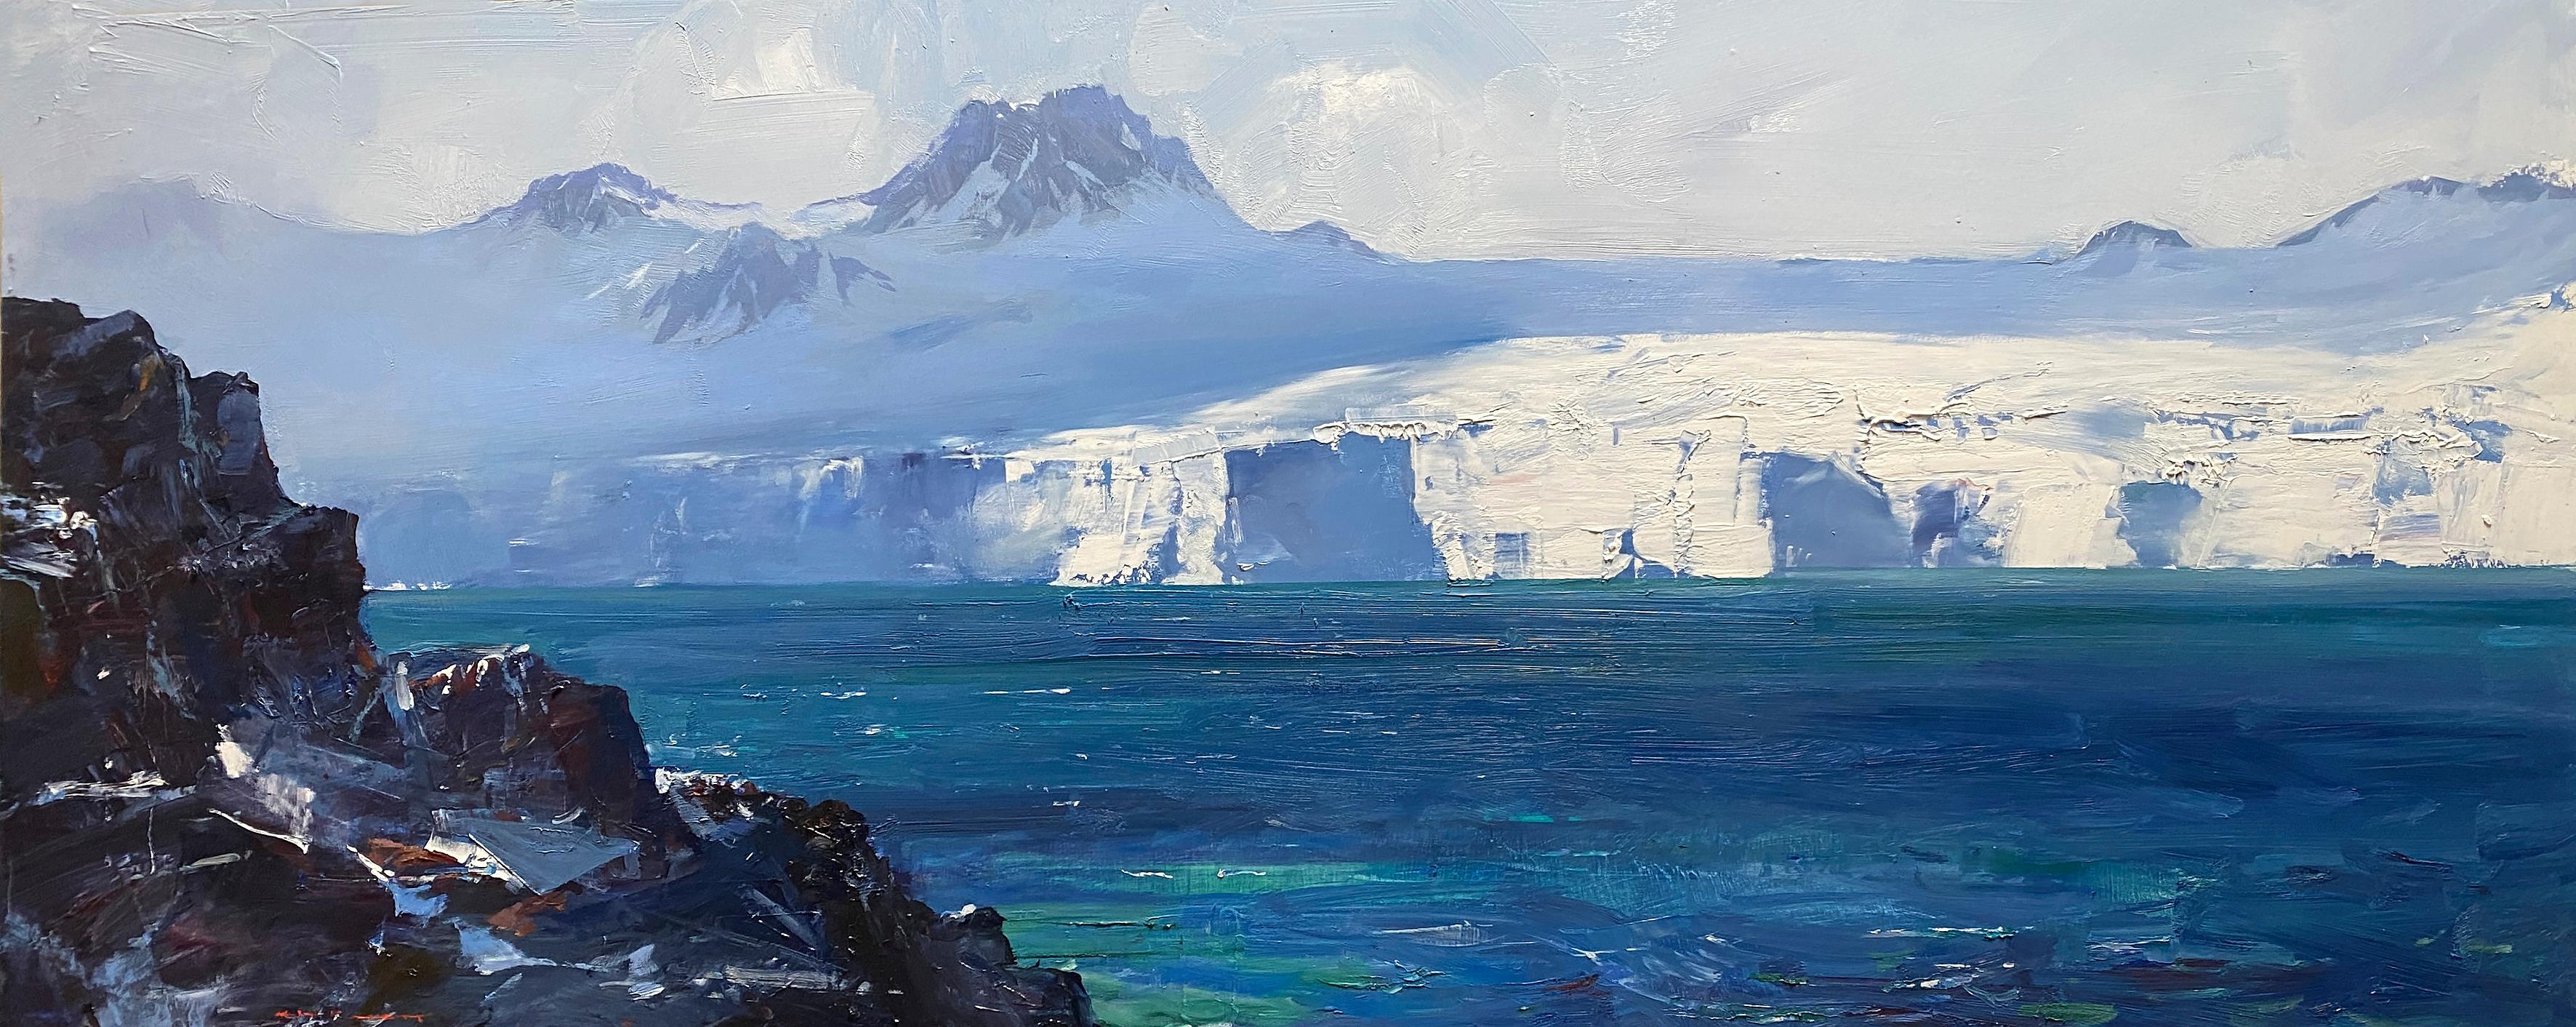 11th February - Half Moon Island - Antarctica I